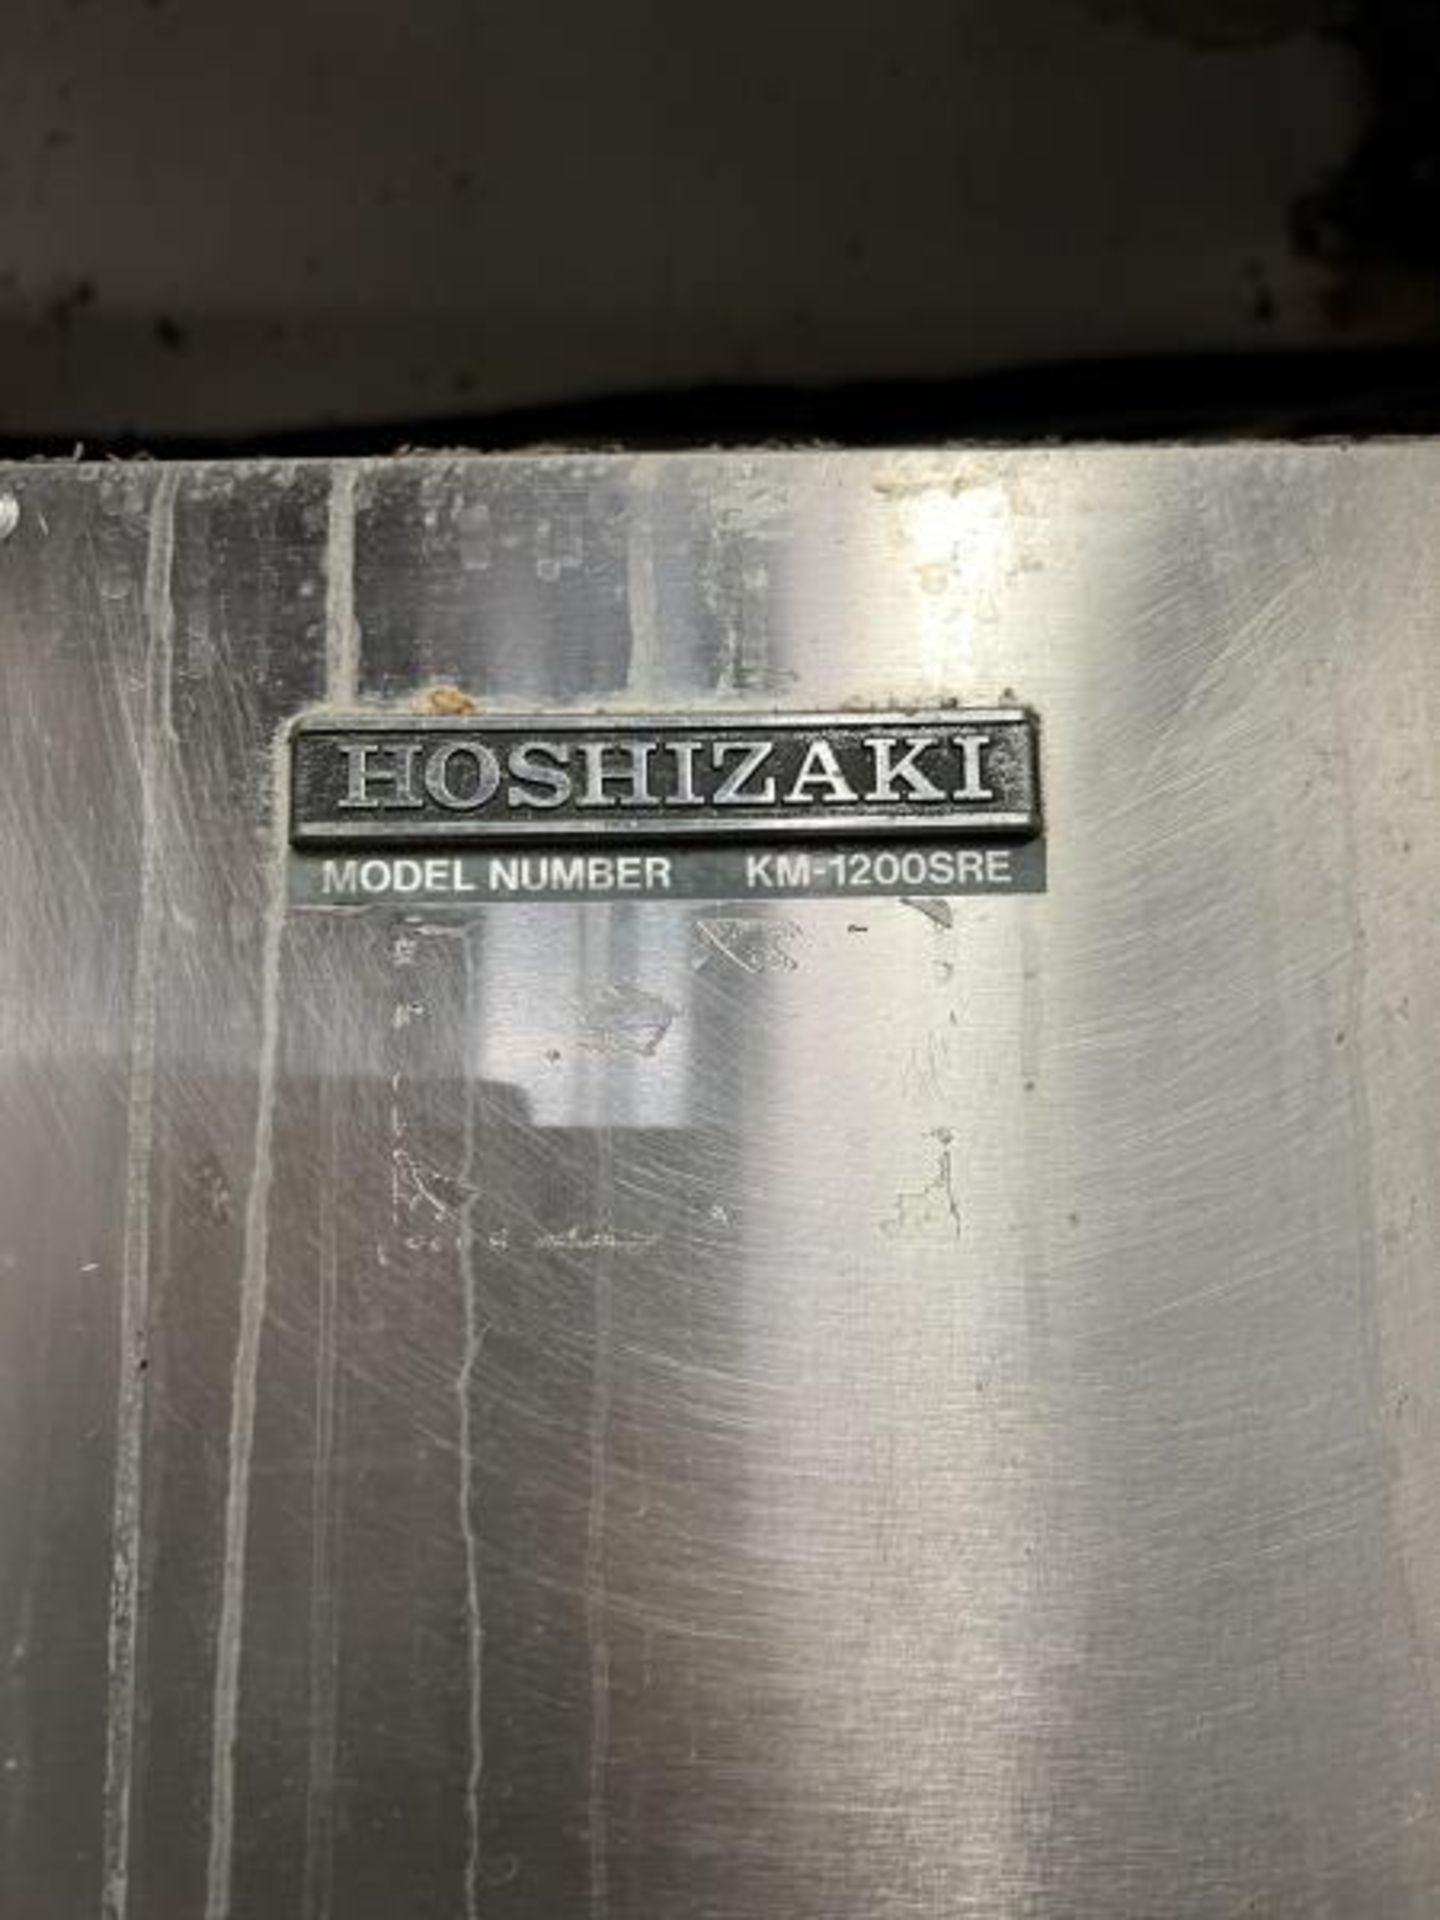 Hoshizaki Ice Maker, Working, M: KM-1200SRE in Basement Kitchen - Image 4 of 4